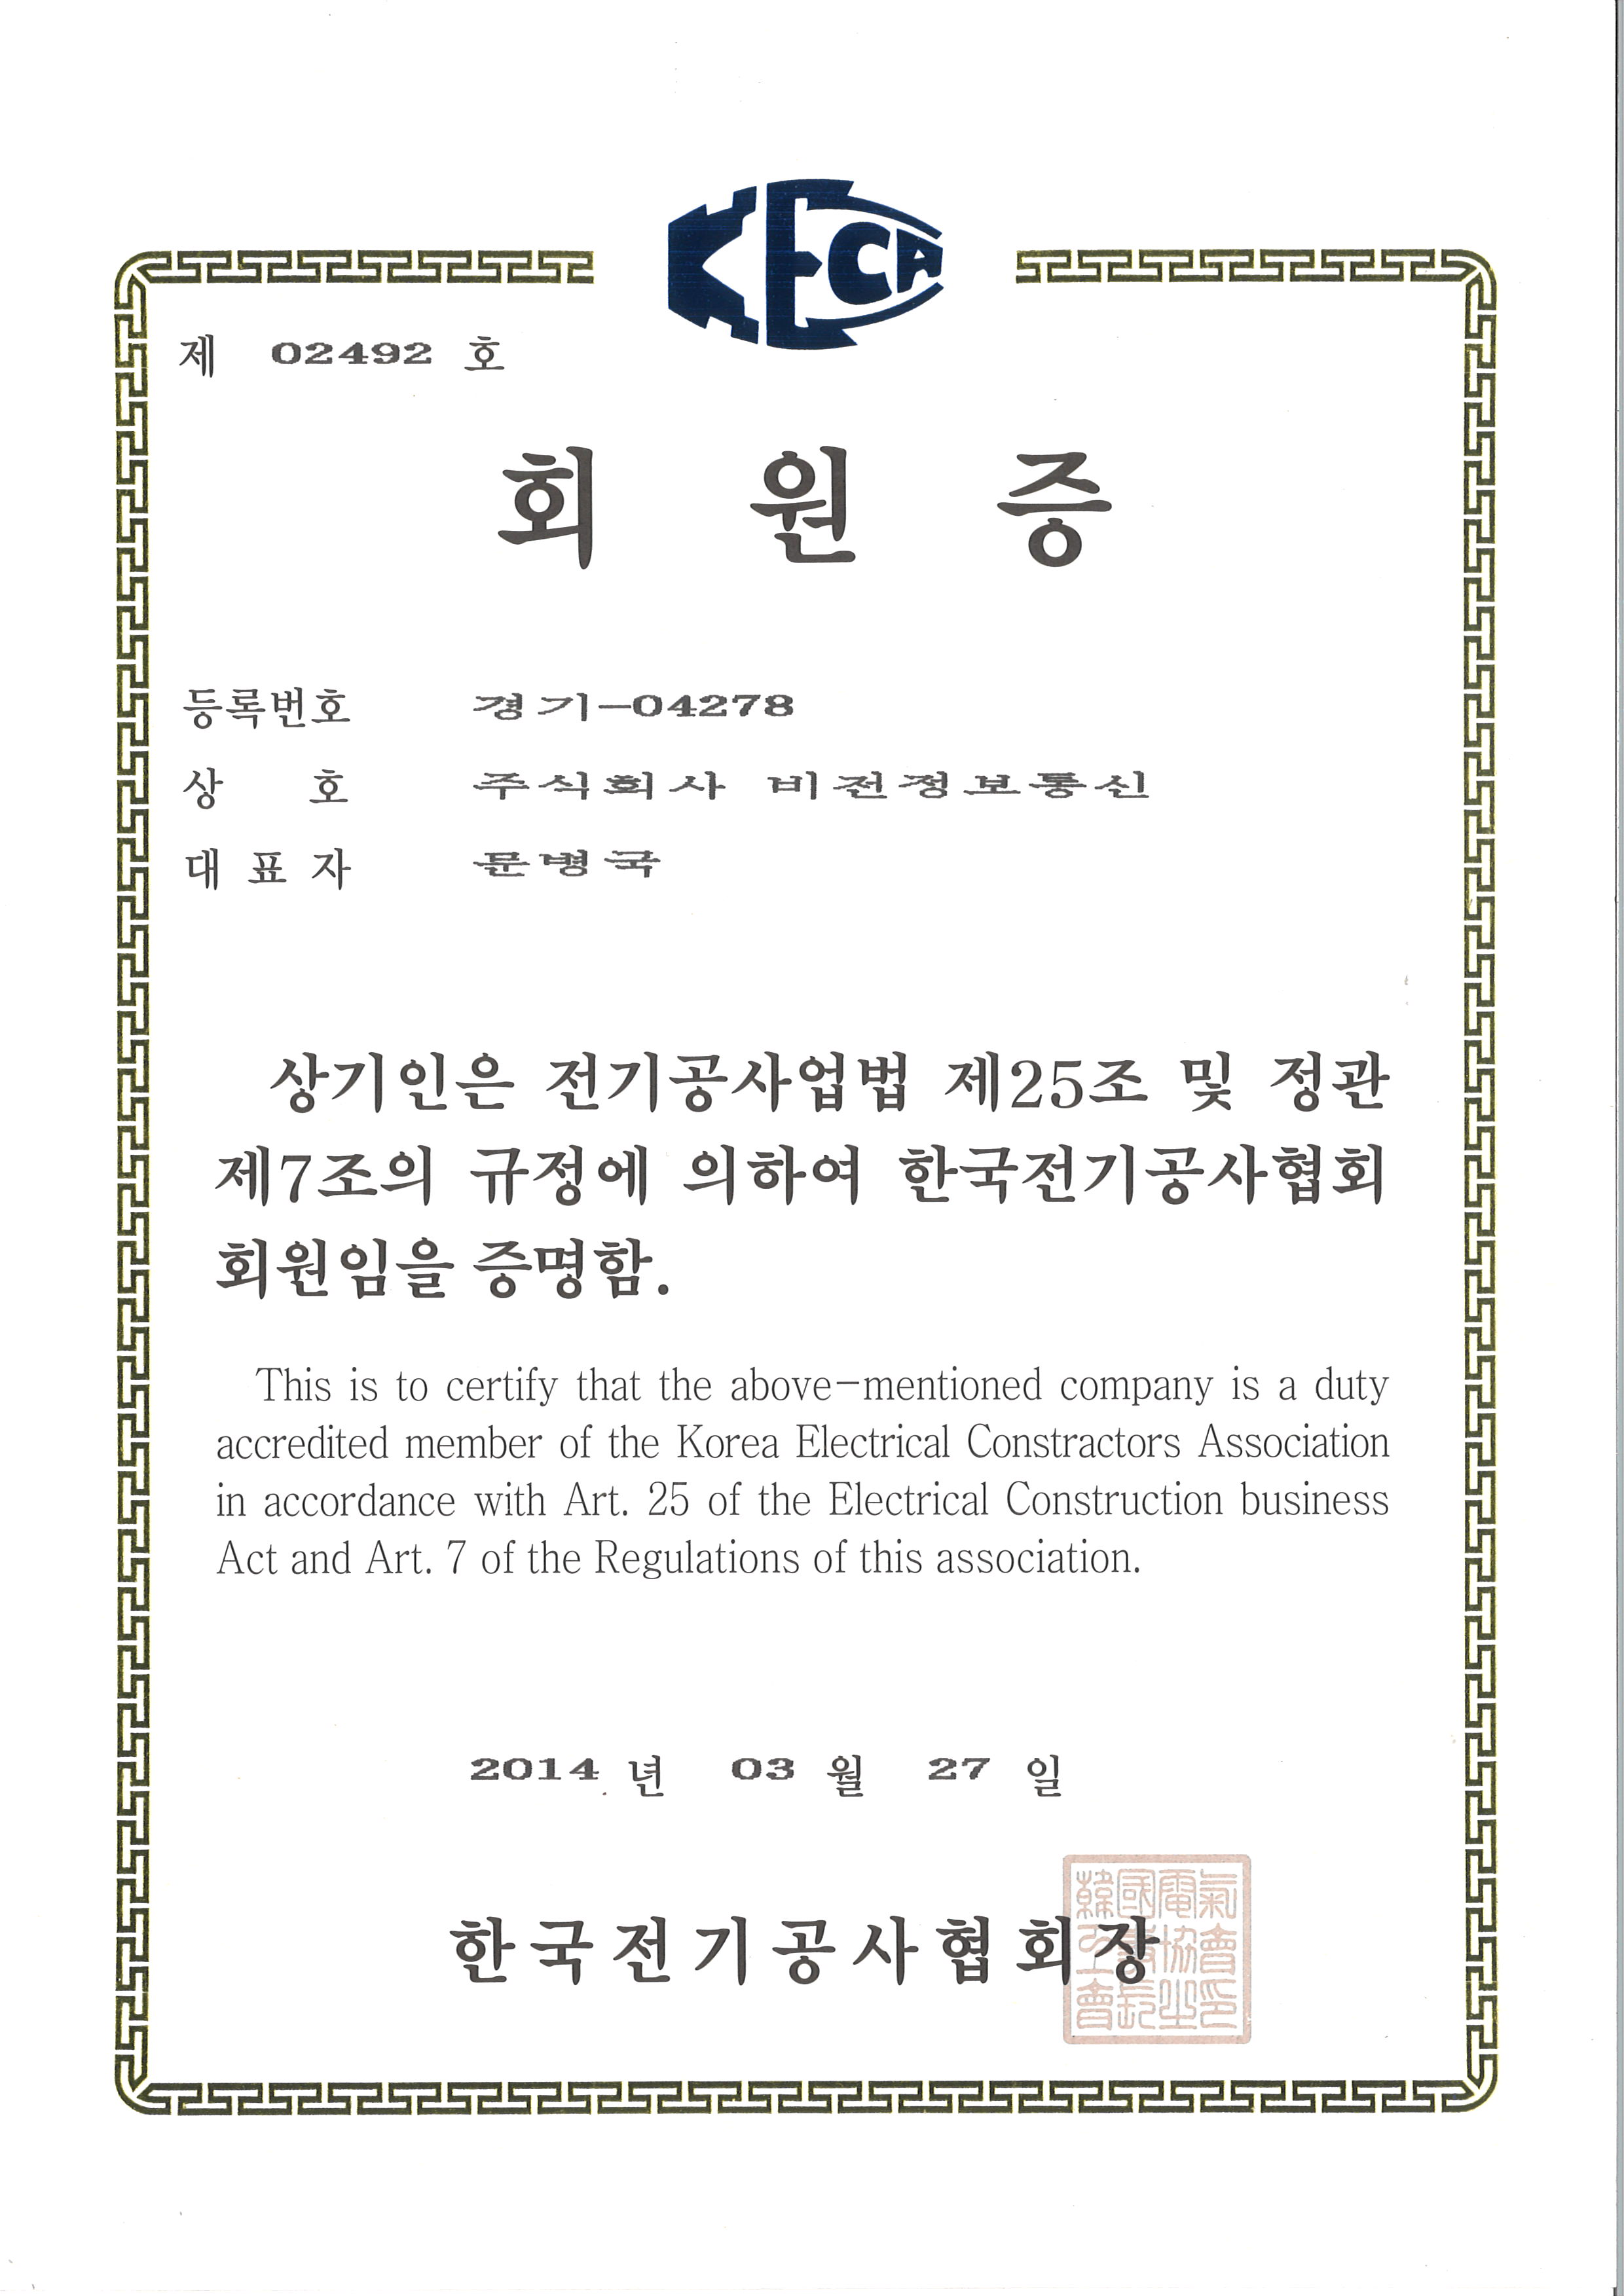 Certificate of membership of Korea Electric Contractors Association